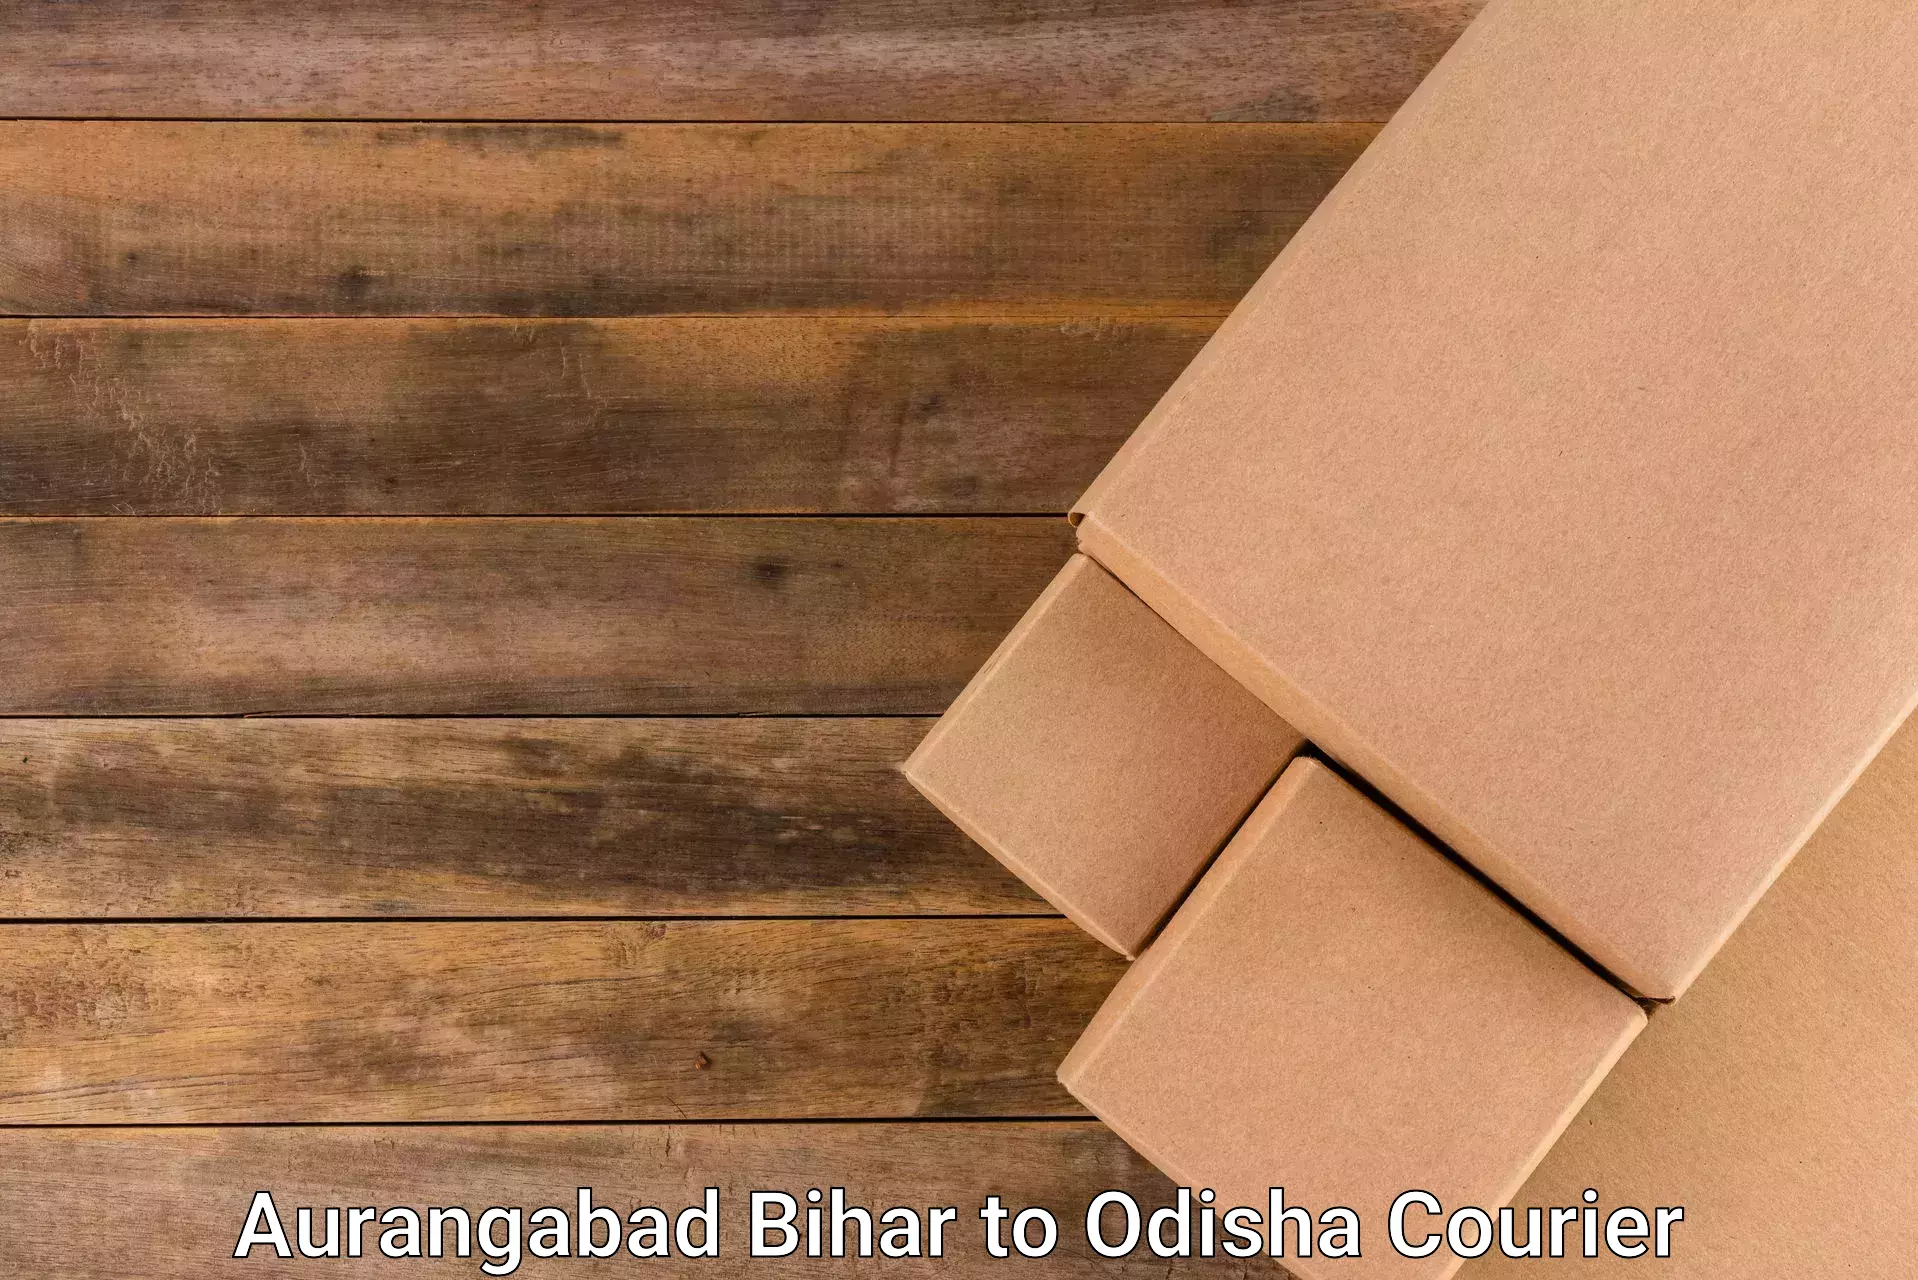 Modern courier technology Aurangabad Bihar to Baisinga